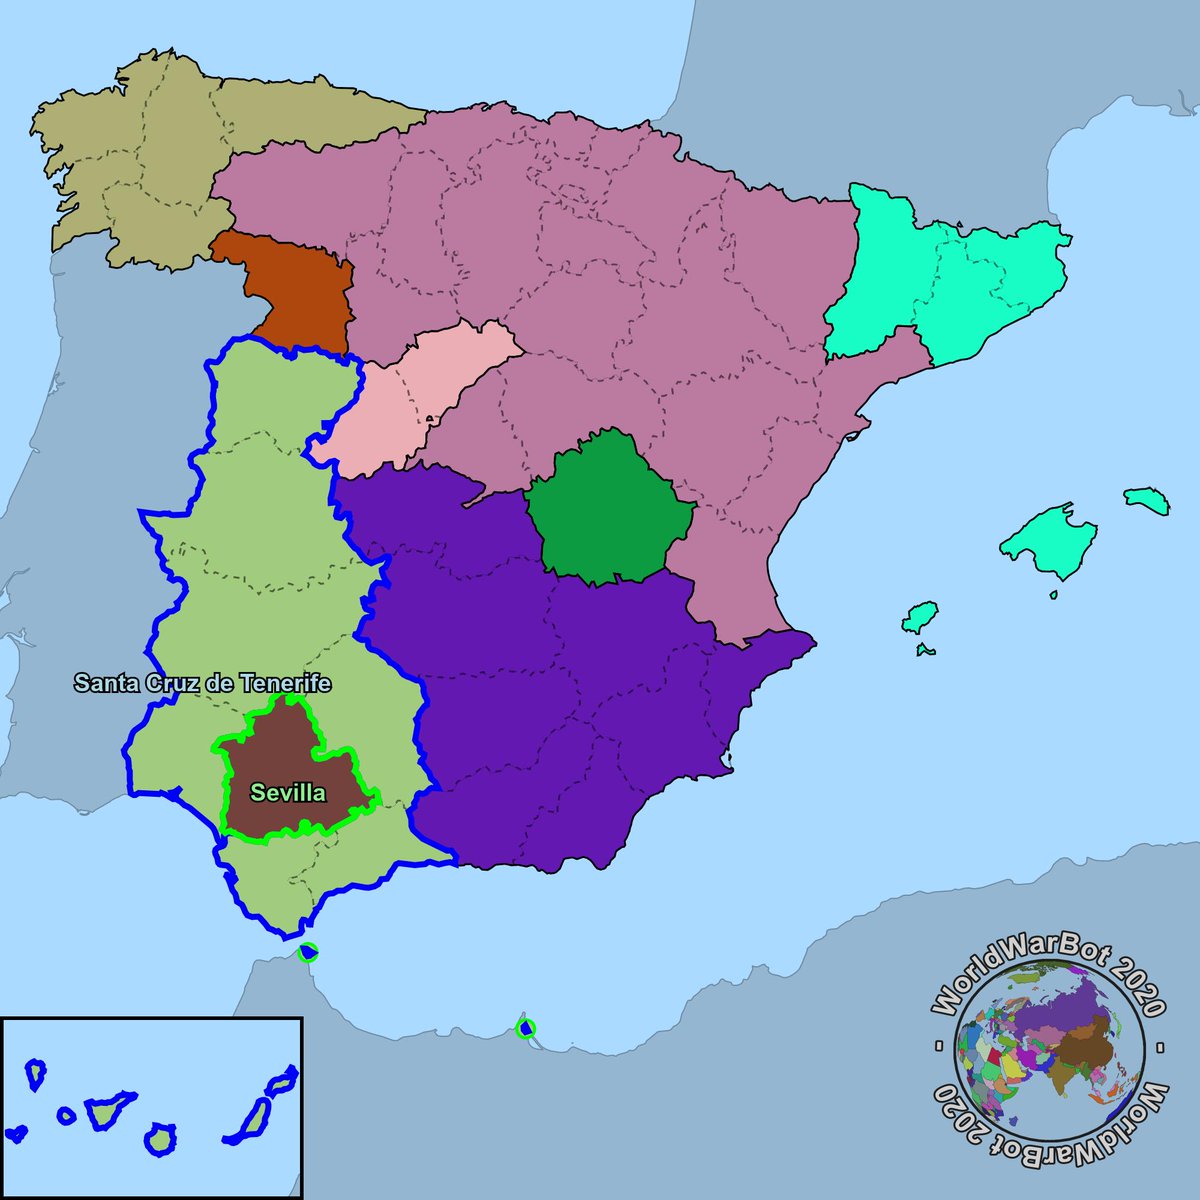 Tercera semana de diciembre, año 2022, Sevilla se ha rebelado contra Santa Cruz de Tenerife y ha logrado independizarse.
#SantaCruzdeTenerife #SantaCruzdeTenerife